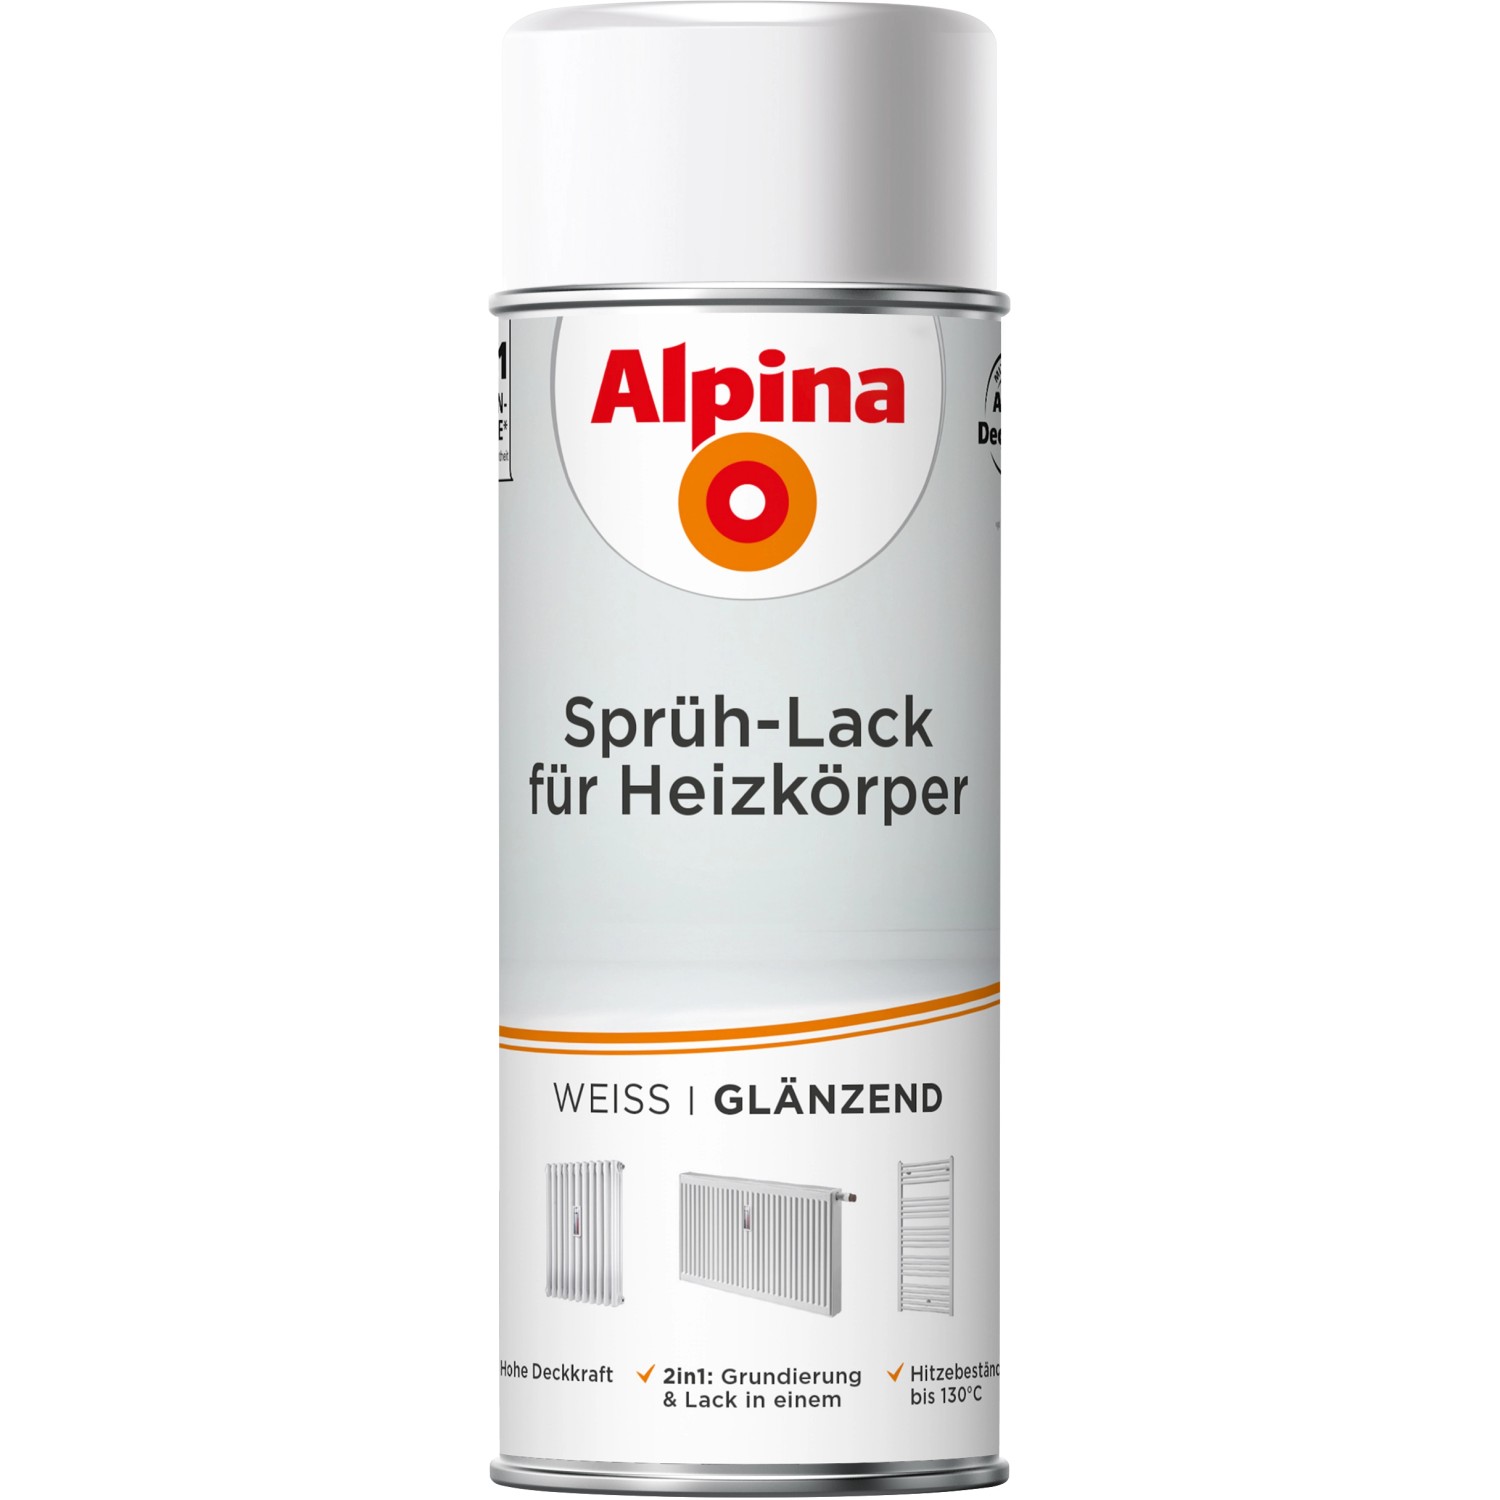 Alpina Sprüh-Lack für Heizkörper 400 ml glänzend